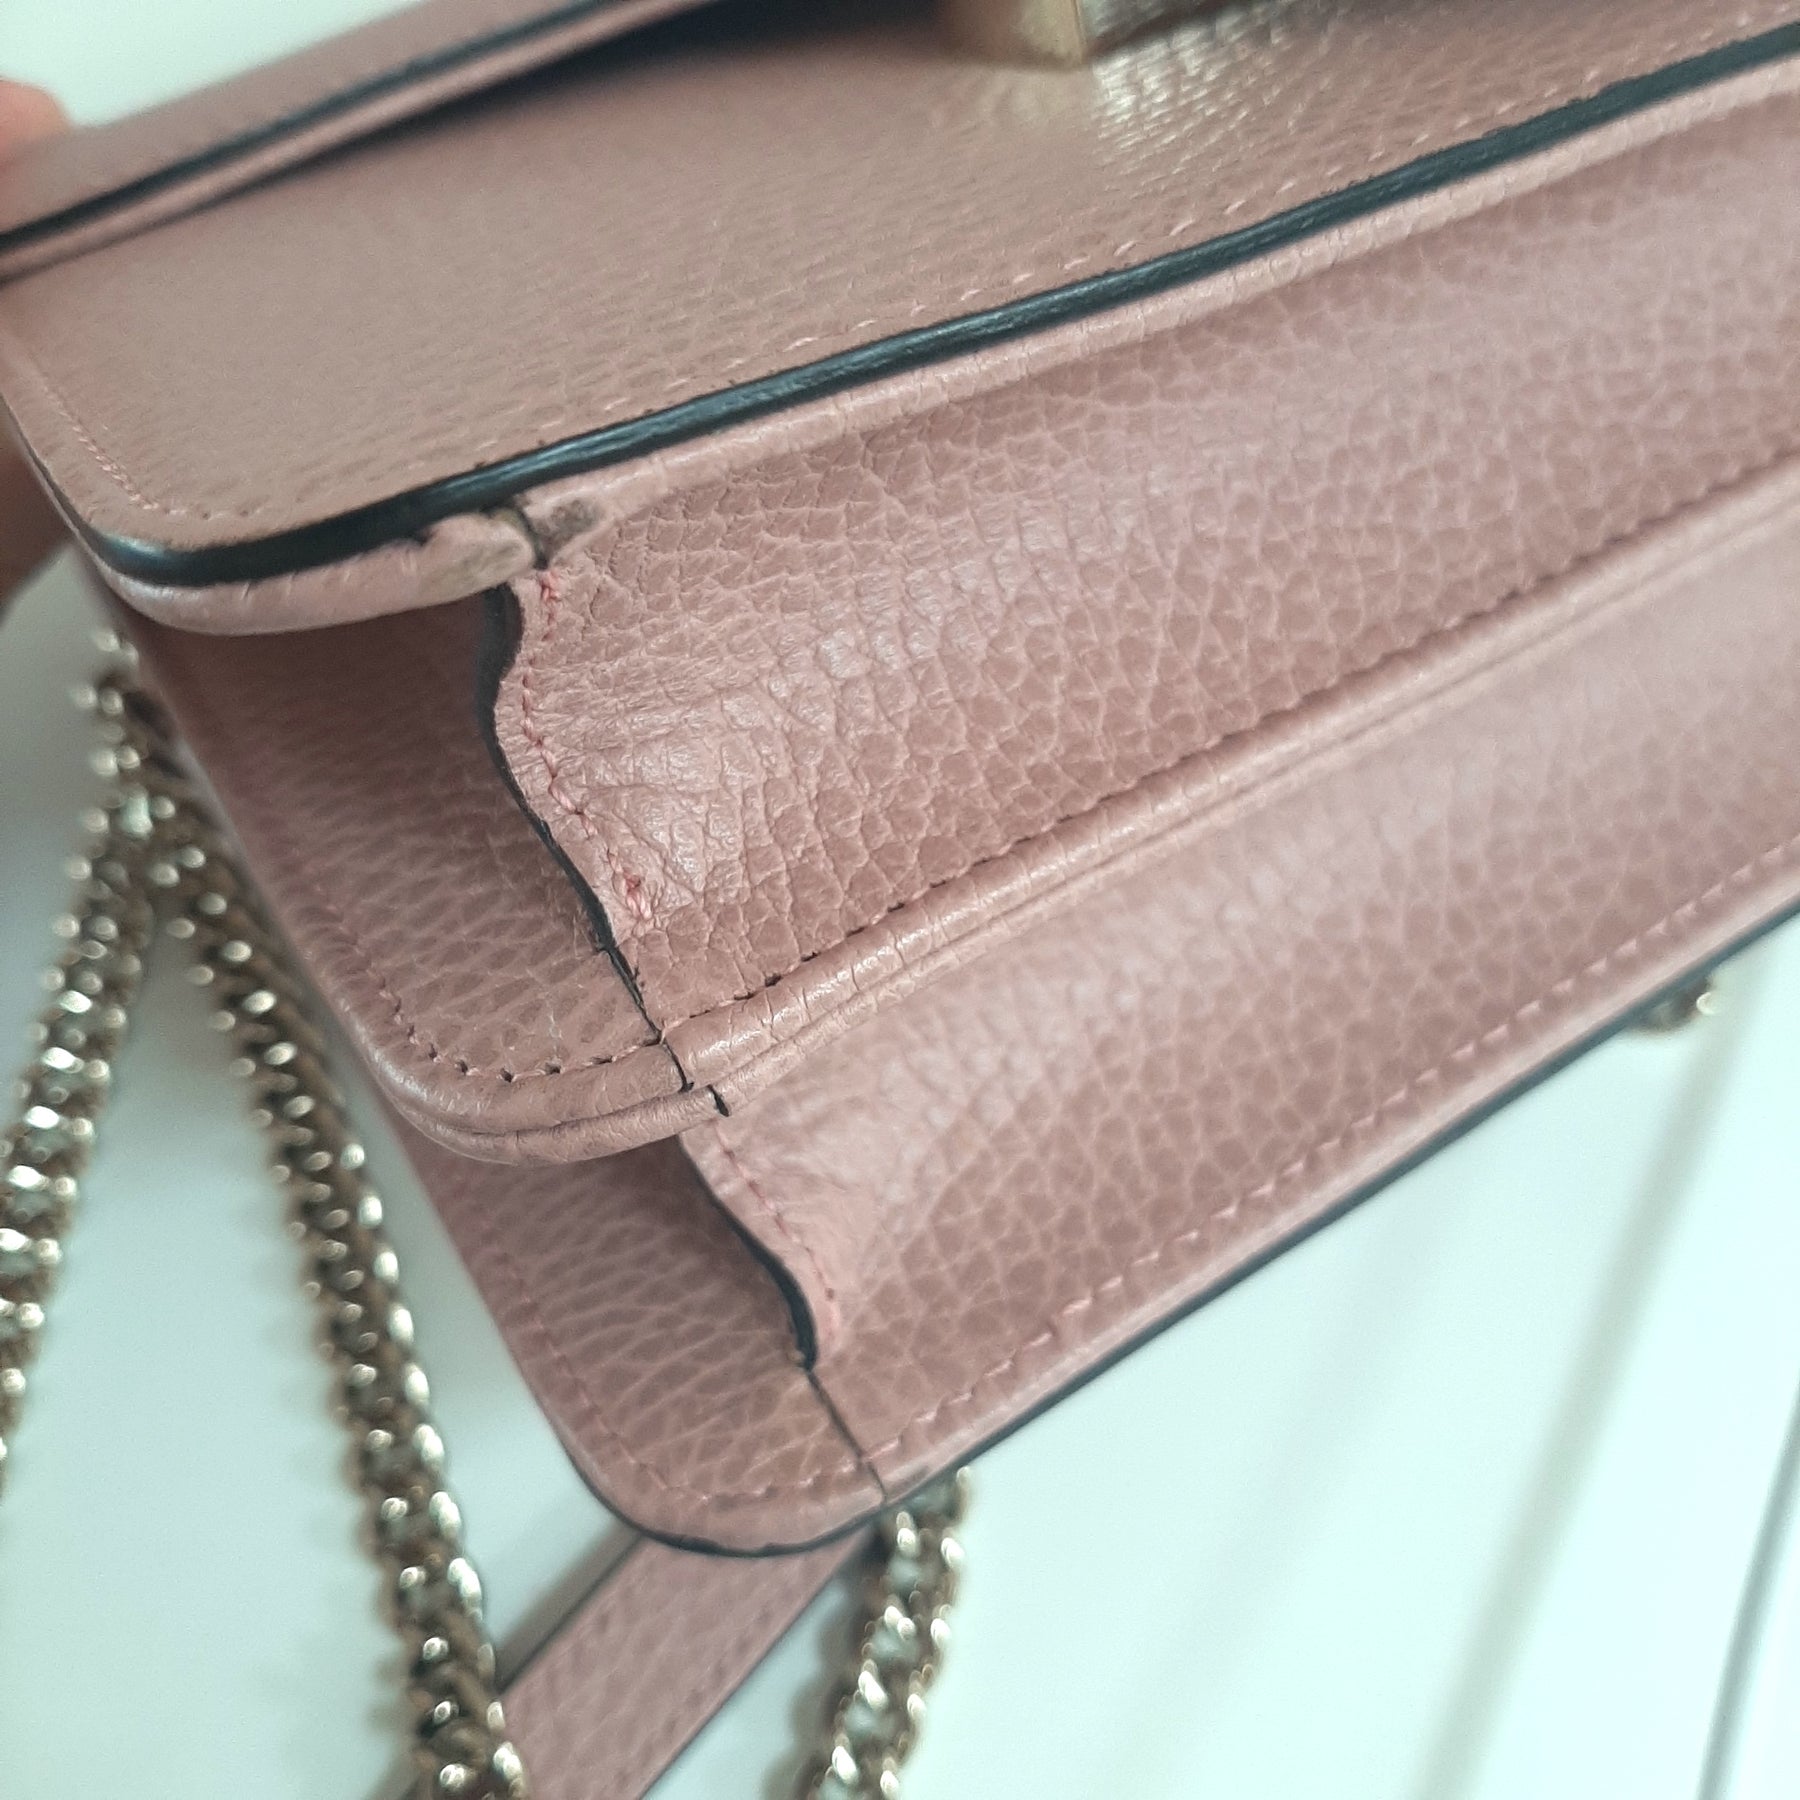 Gucci Interlocking Crossbody Bag in Pink Leather – Fancy Lux